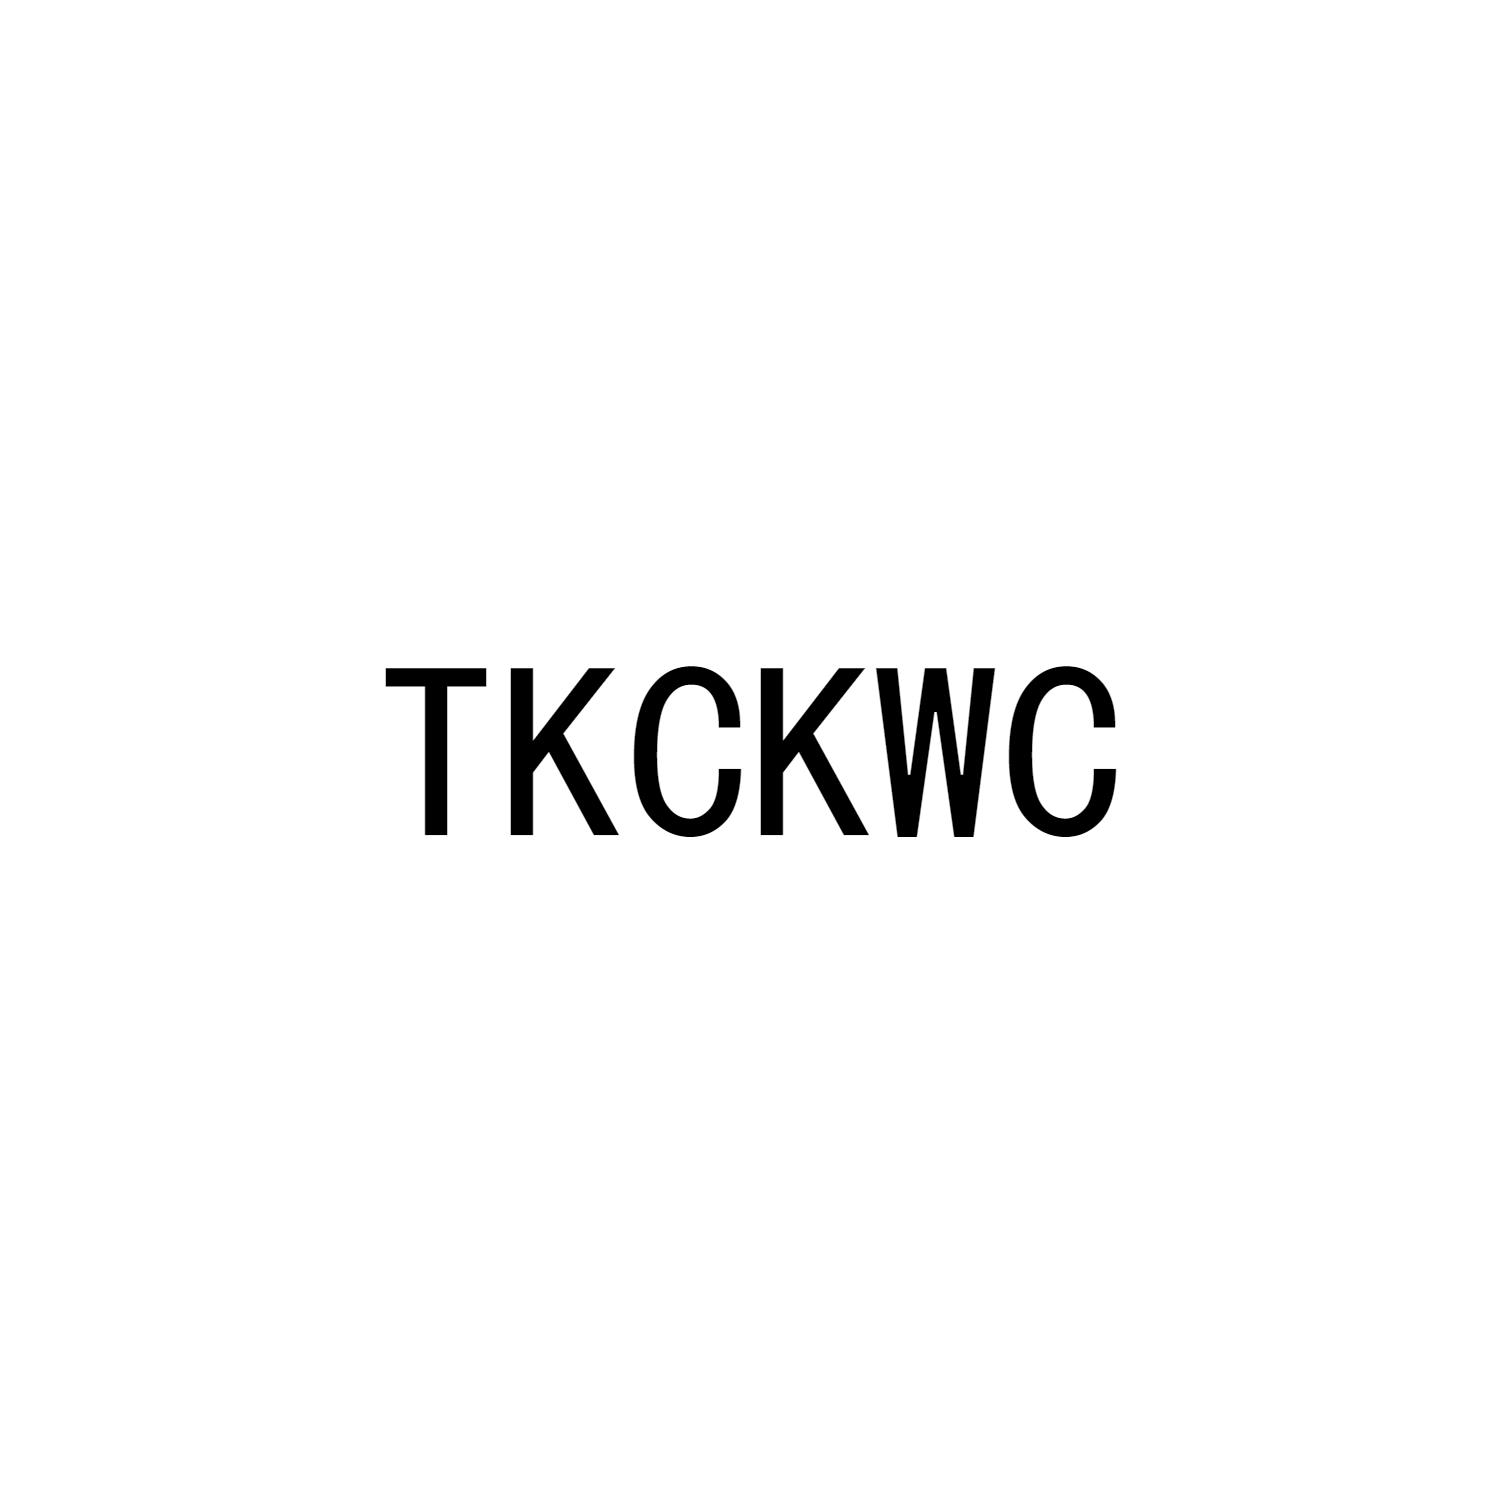 TKCKWC